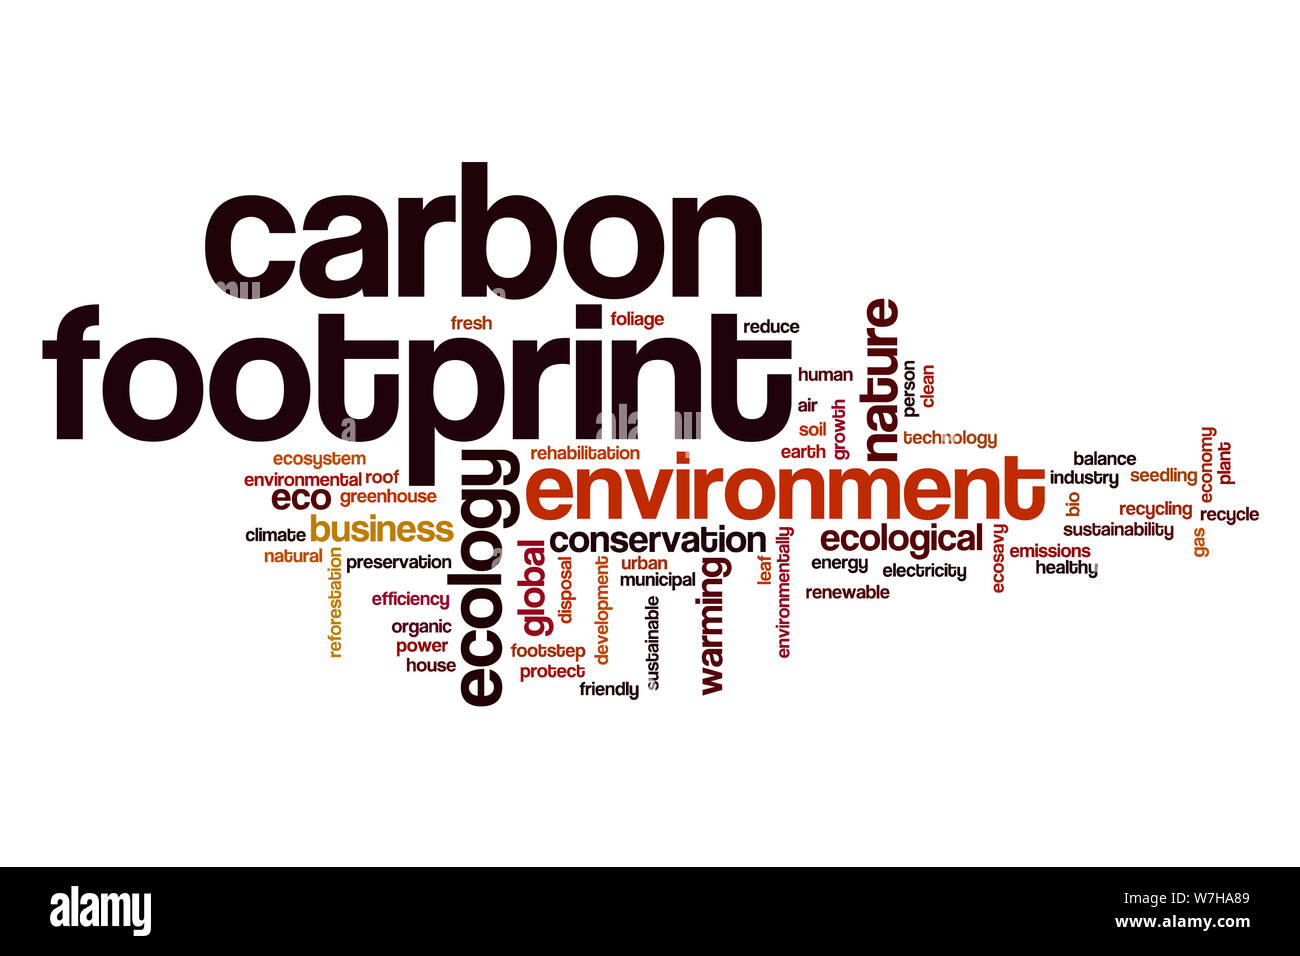 Carbon footprint word cloud concept Stock Photo